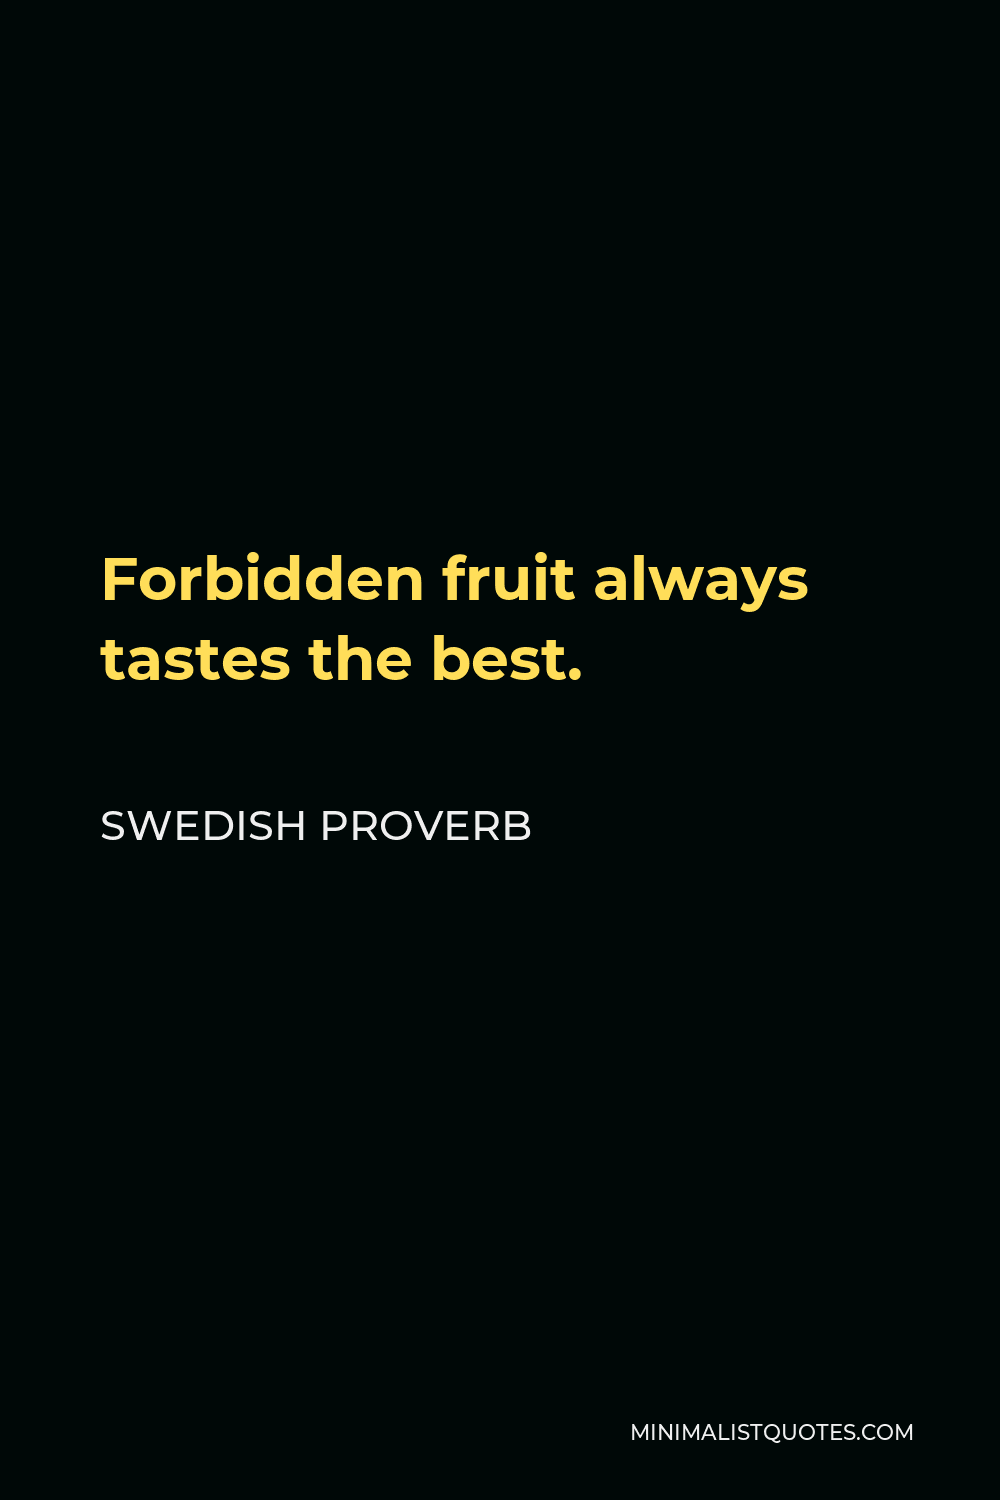 Swedish Proverb Quote - Forbidden fruit always tastes the best.